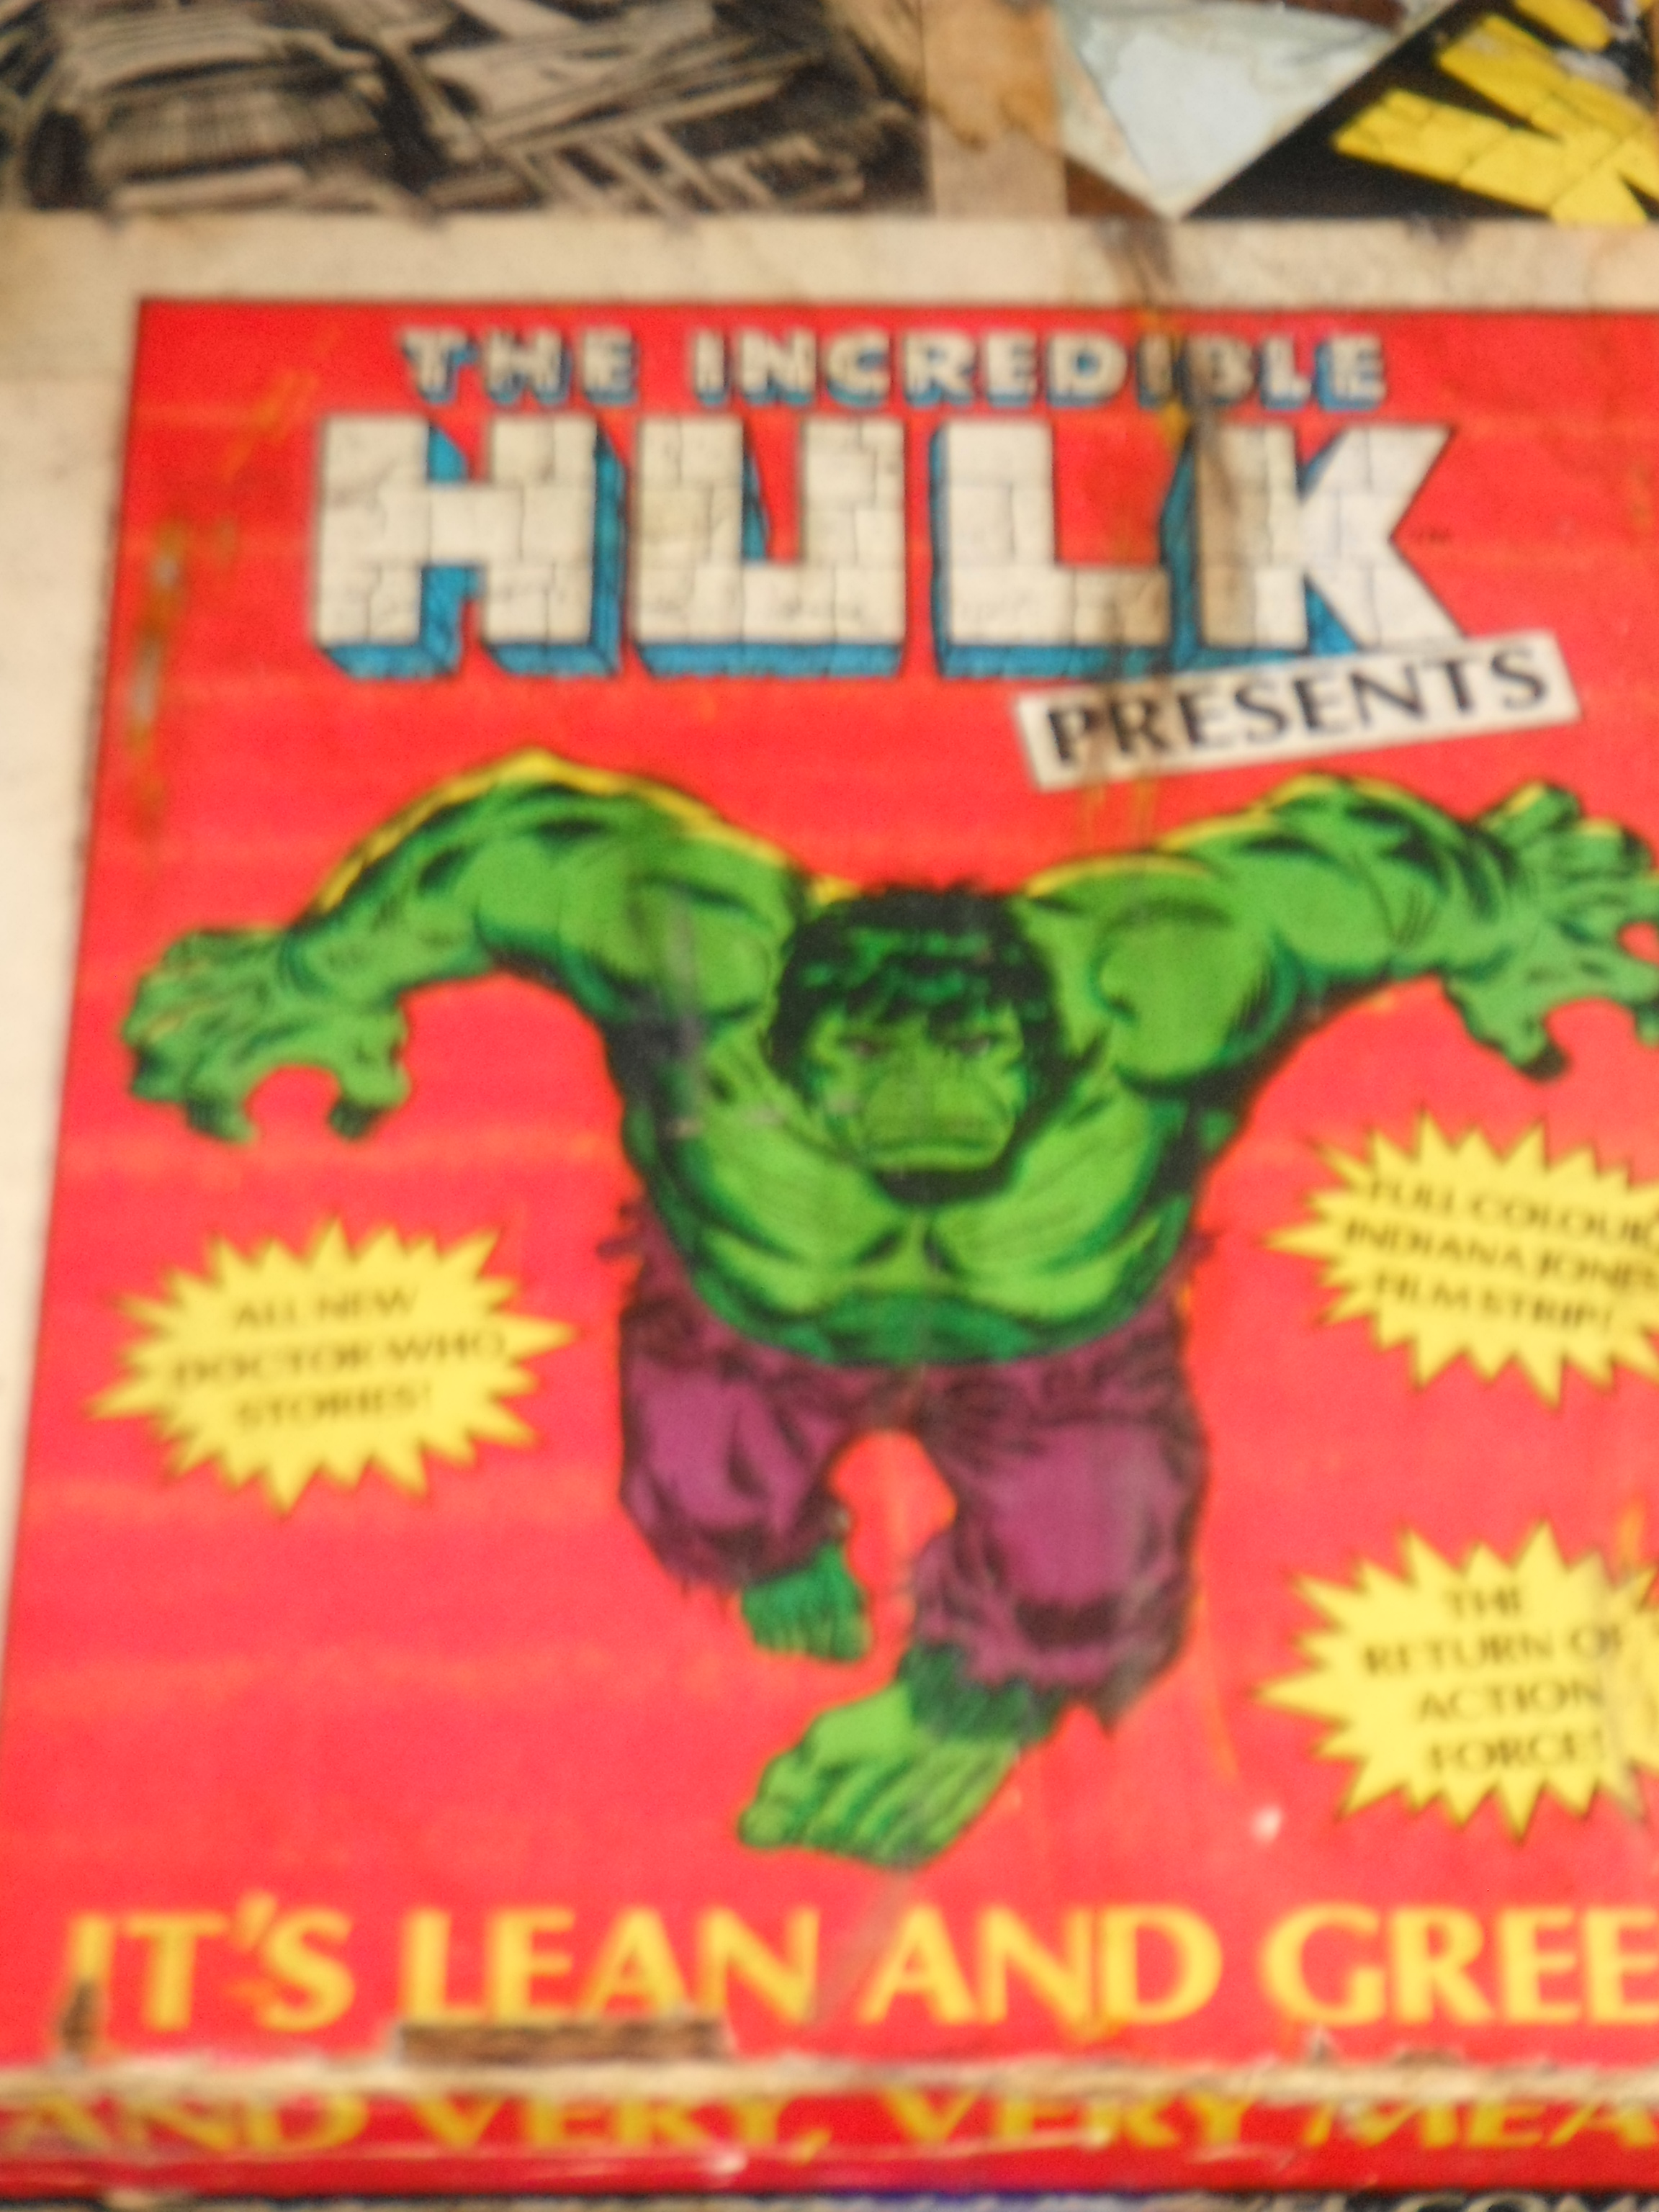 Photo taken by me – Hulk comic table cover, FAB Café, Manchester 